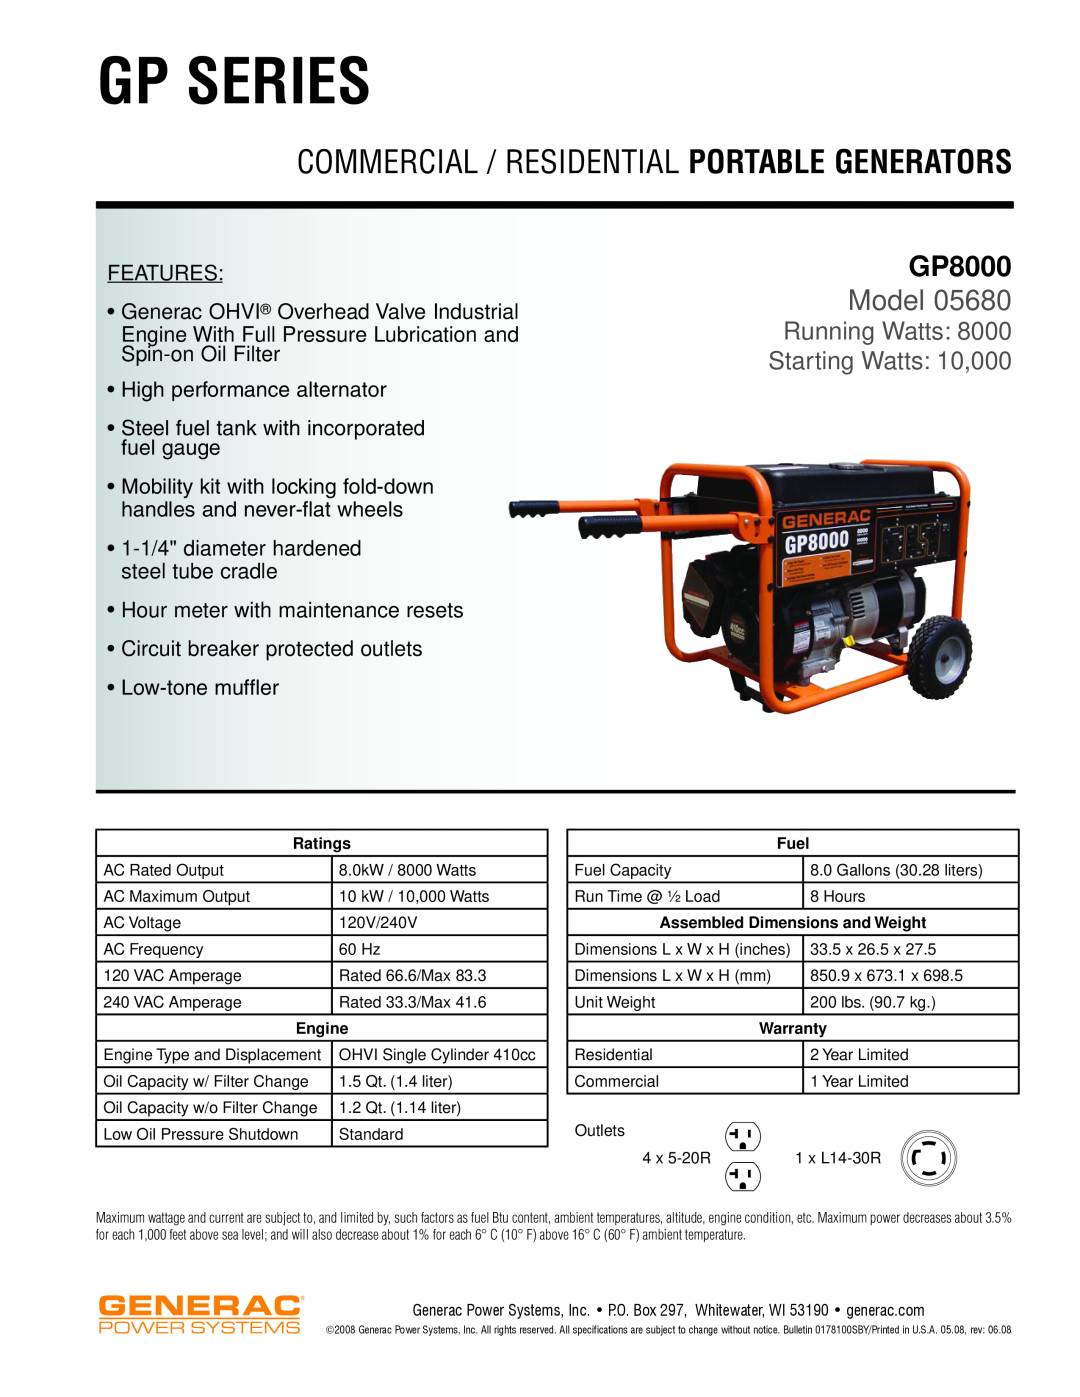 Generac Power Systems SP SERIES dimensions Gp Series, Commercial / Residential Portable Generators, GP8000, Model, Ratings 